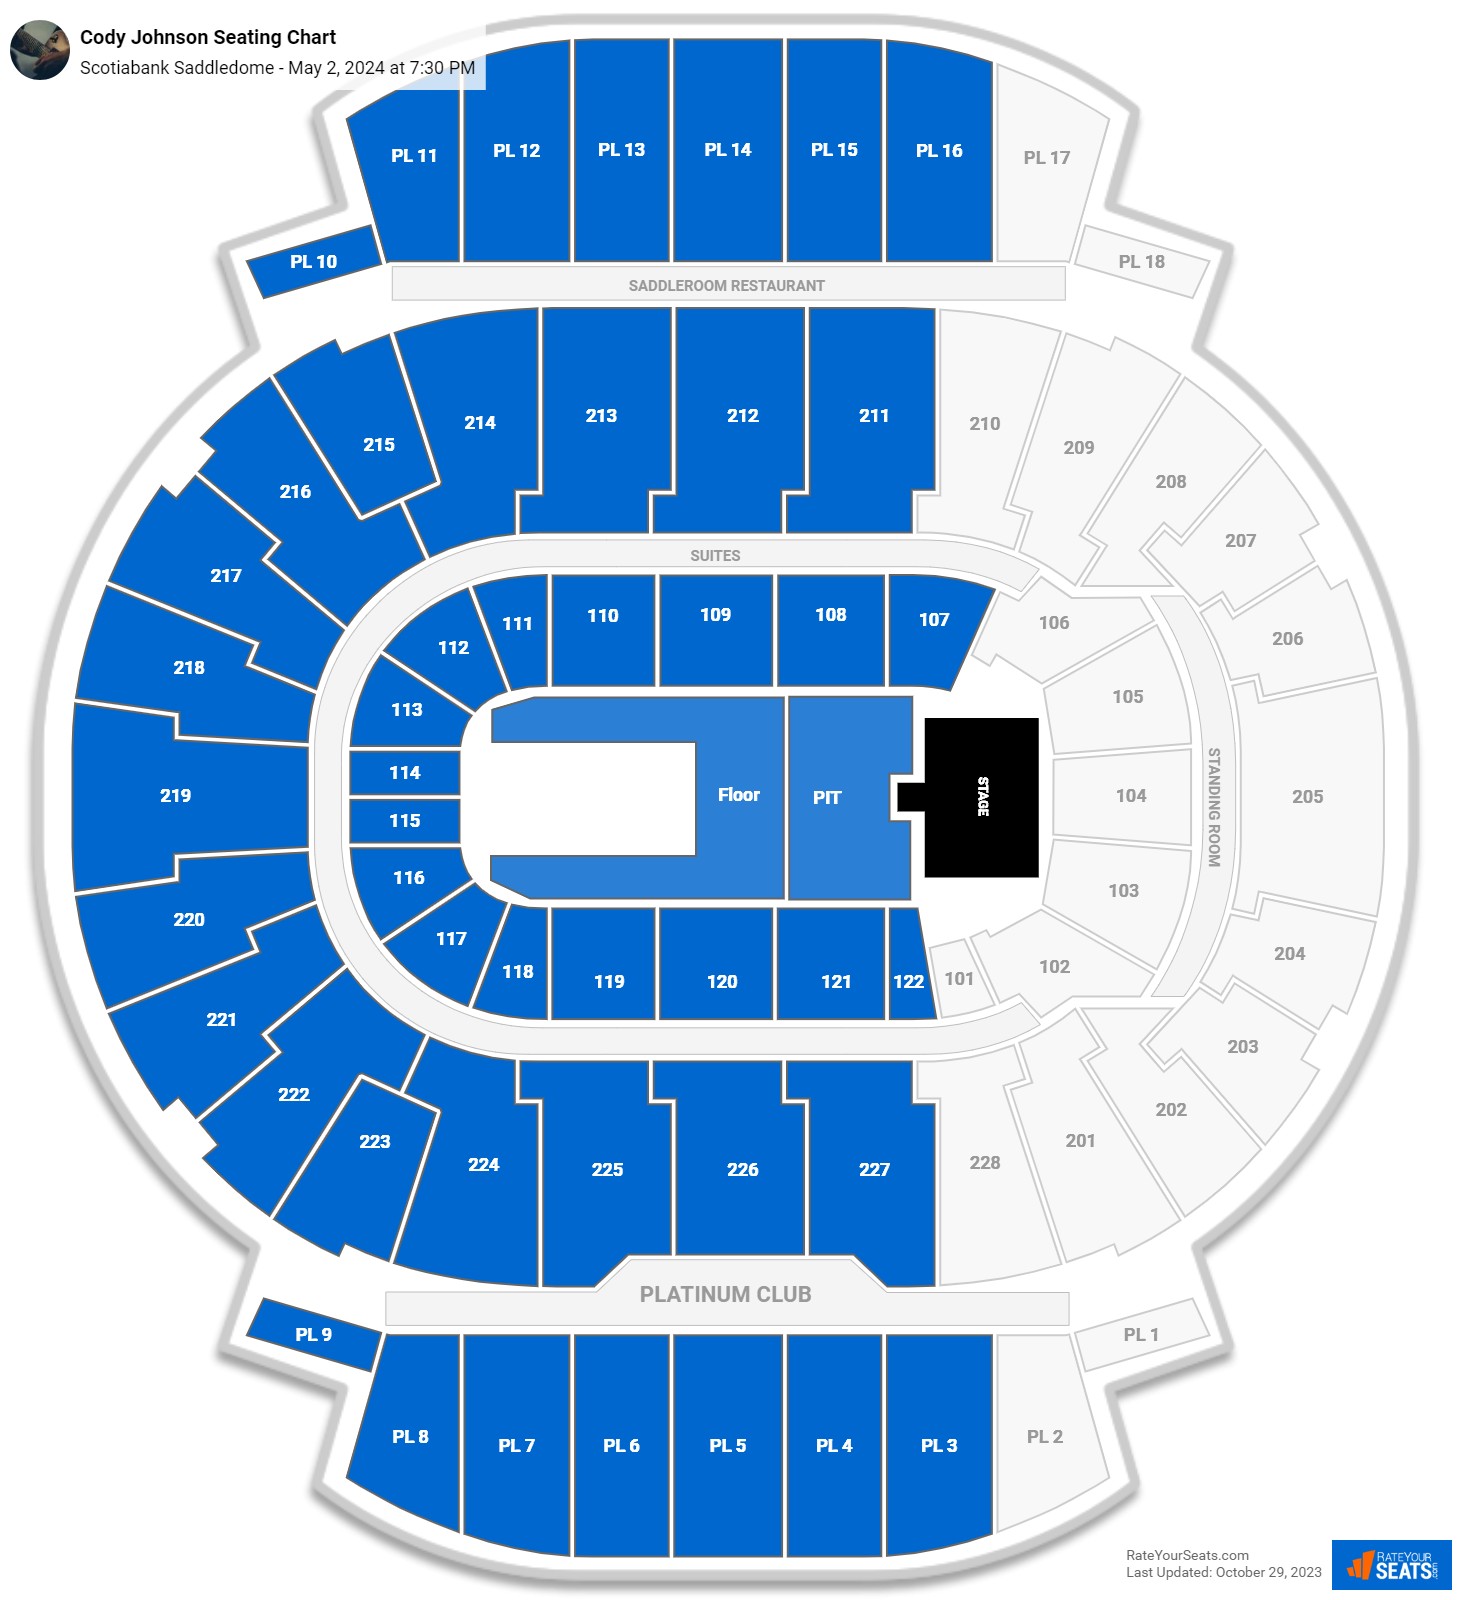 Scotiabank Saddledome Concert Seating Chart - RateYourSeats.com